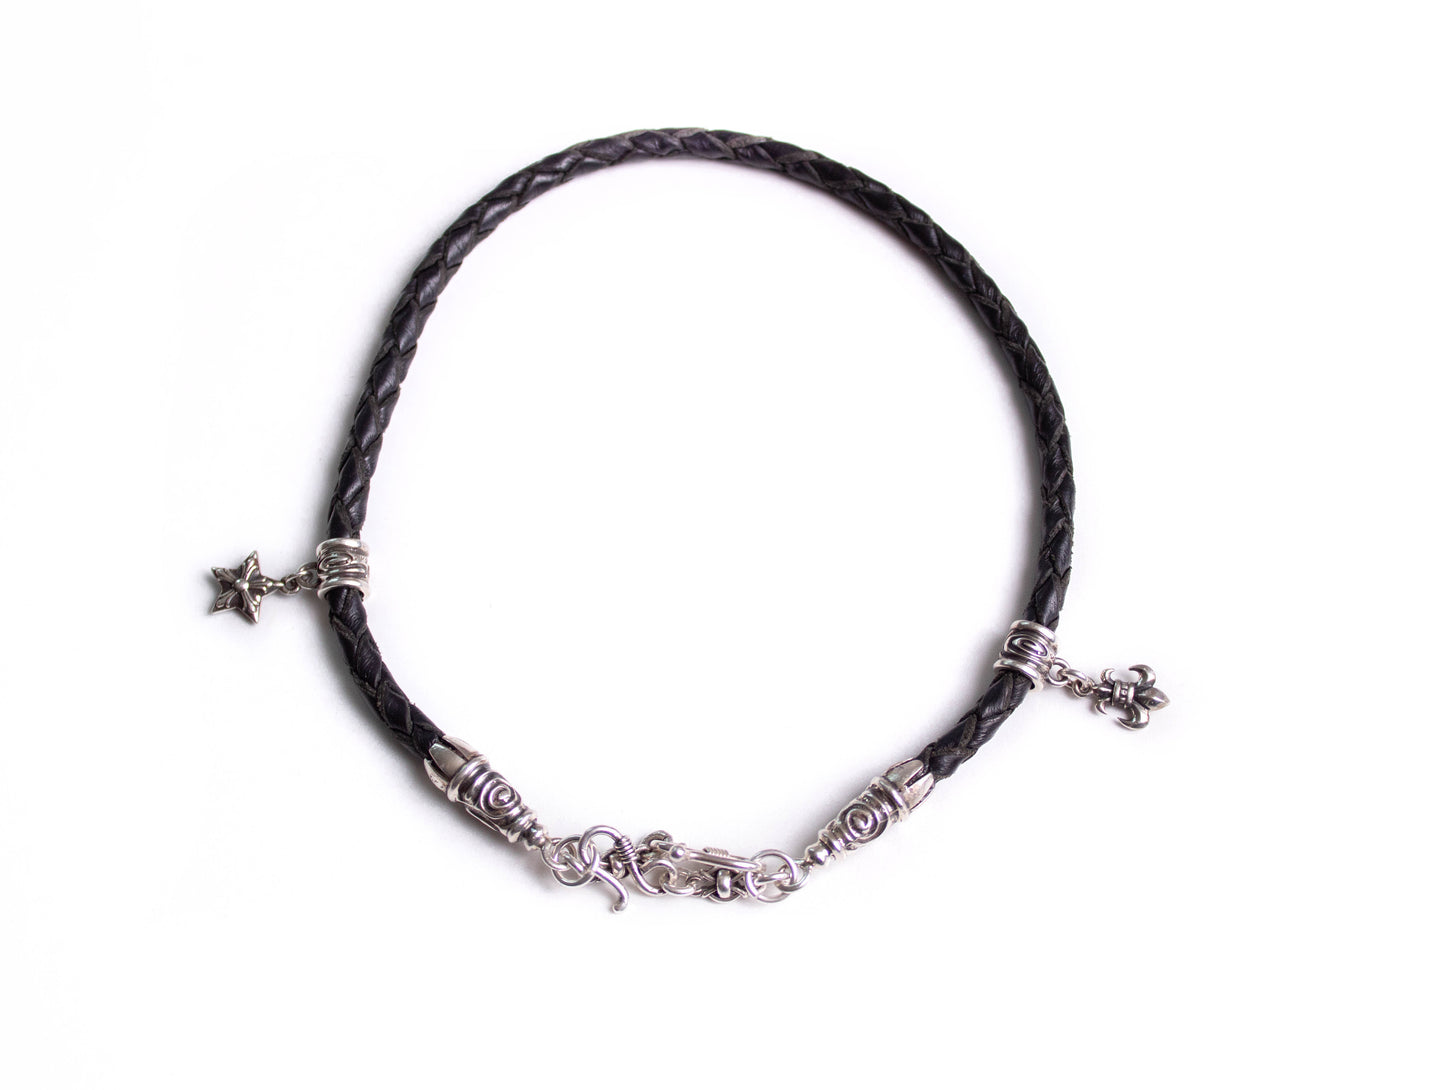 925 Sterling Silver & Genuine Leather Bracelet/Choker/Strap 4 strands Hand-braided.- P02